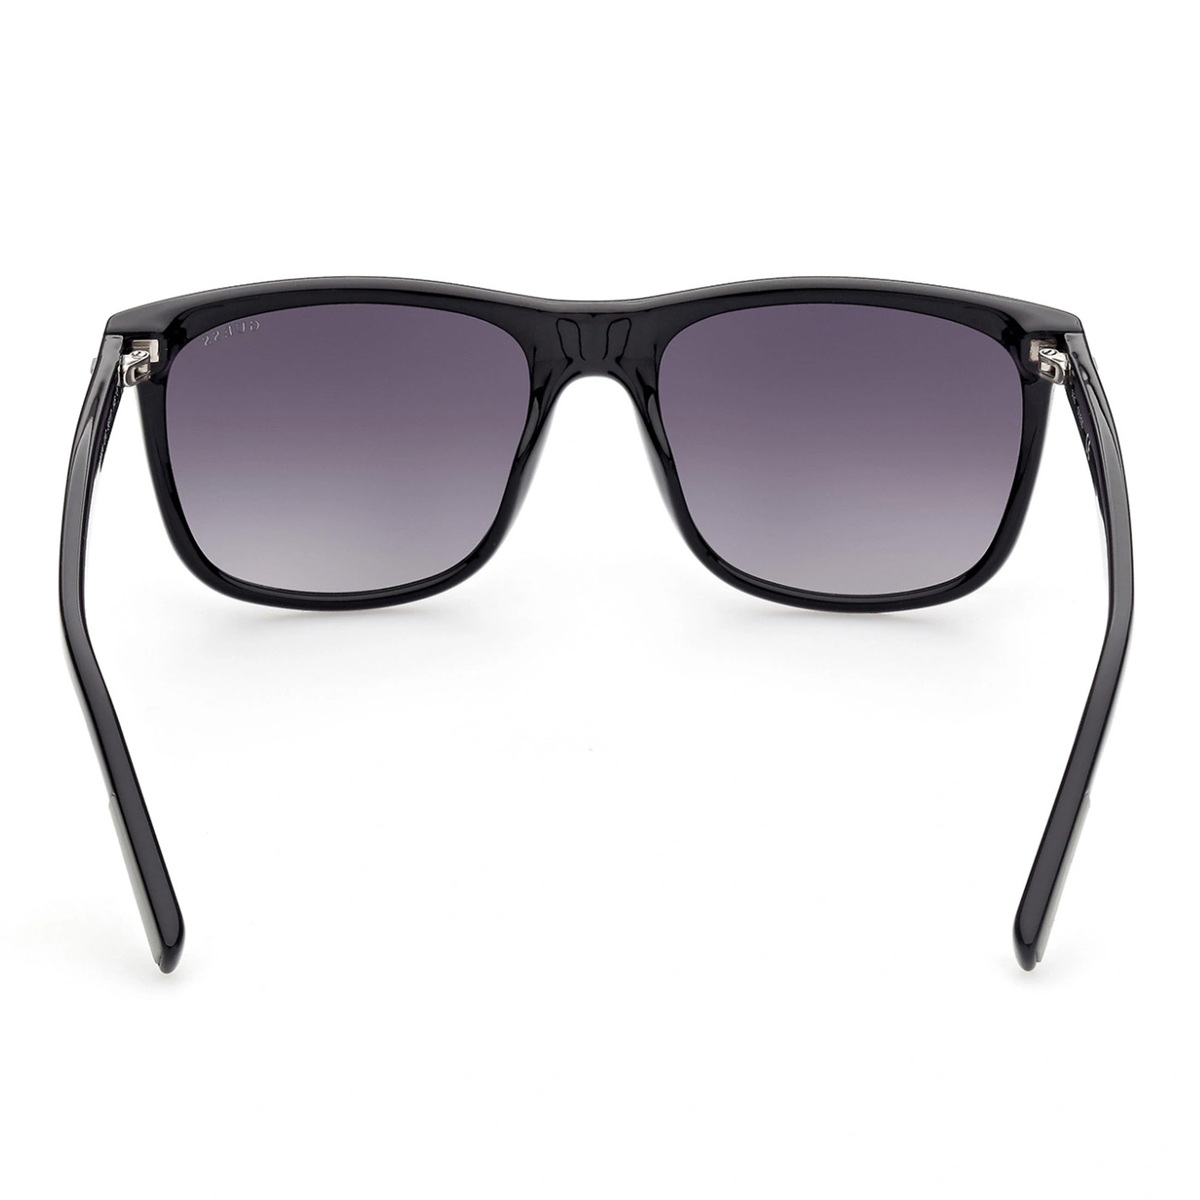 Guess Men's Square Sunglasses, Smoke Mirror, GU00024 01C